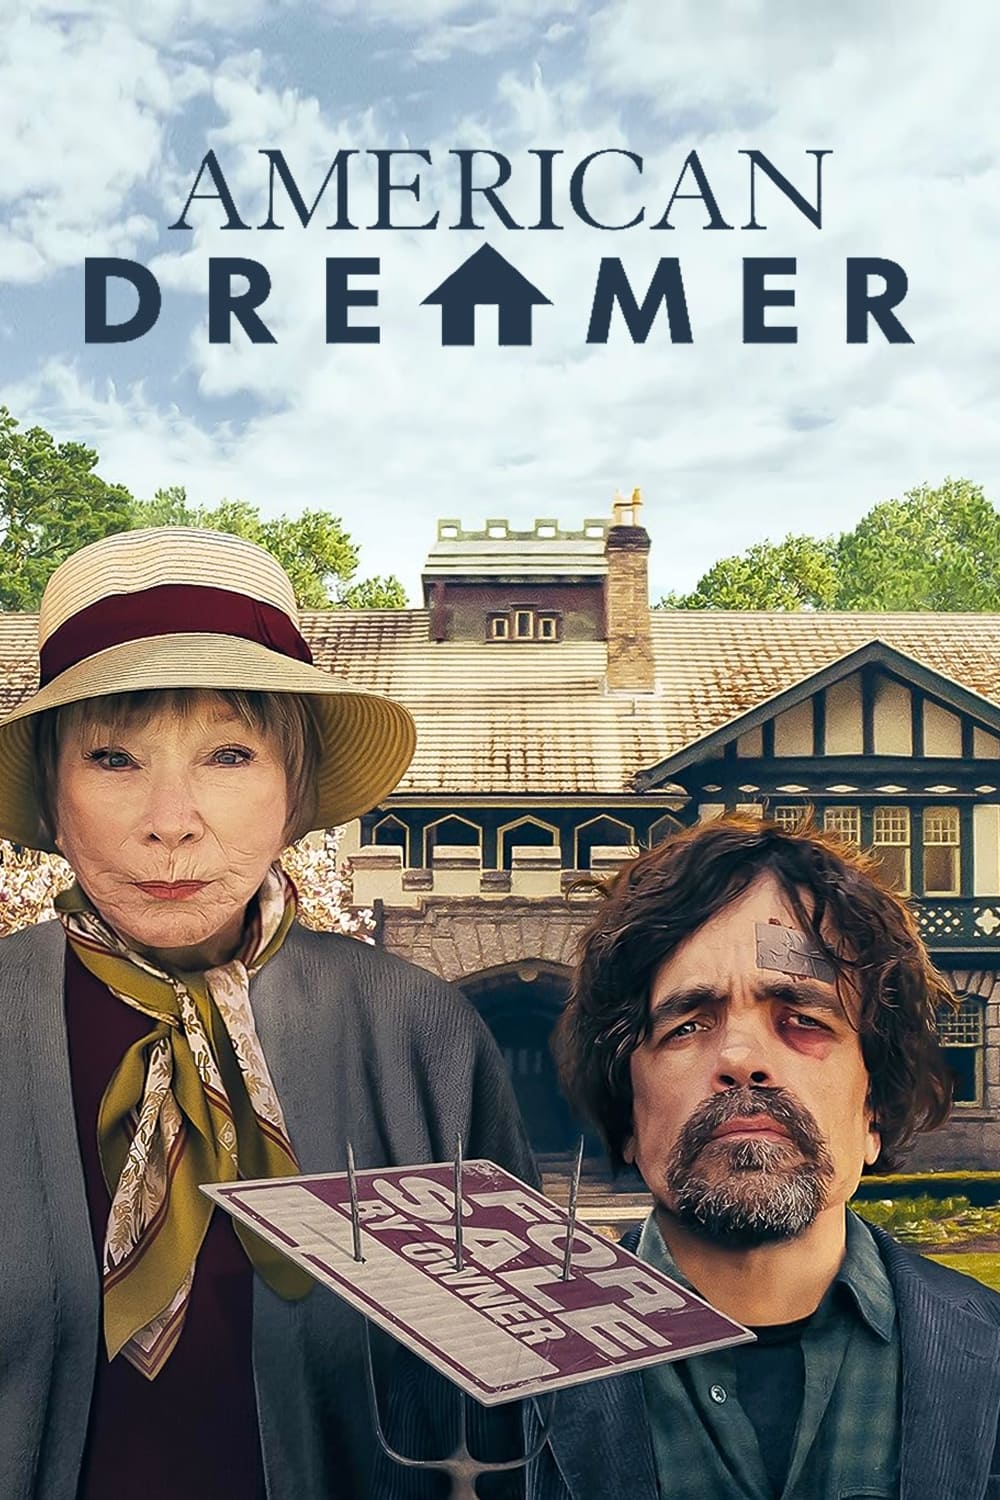 American Dreamer film